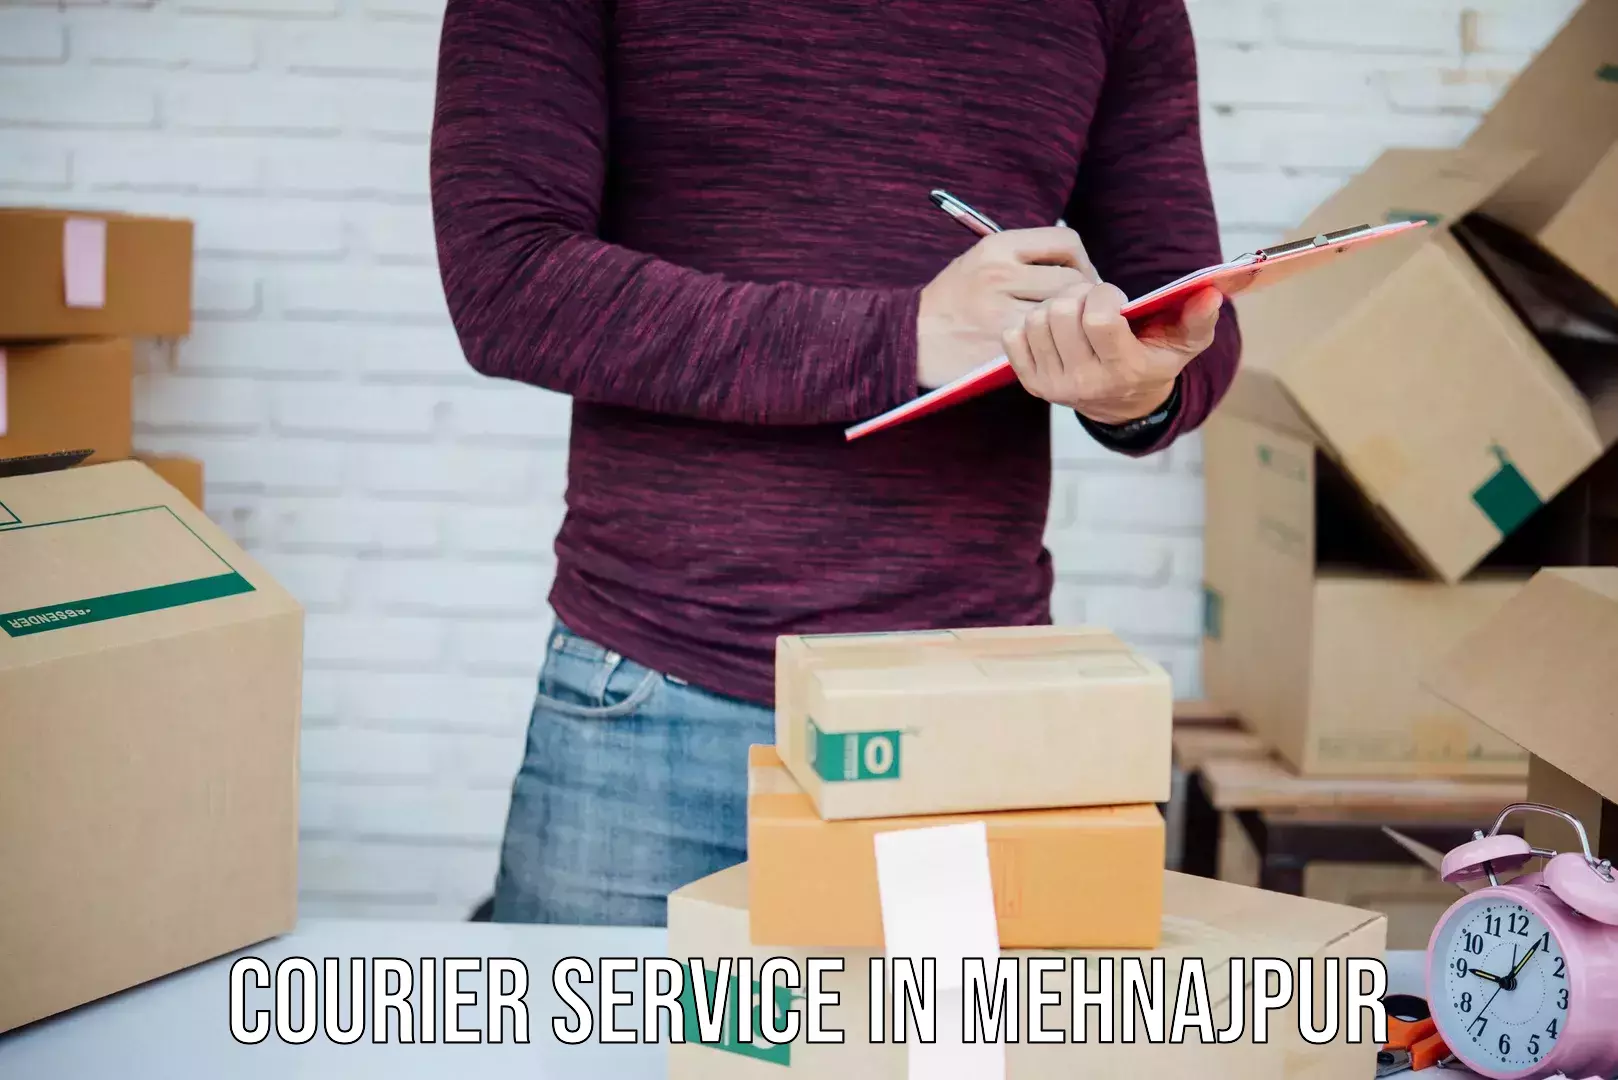 Courier service comparison in Mehnajpur